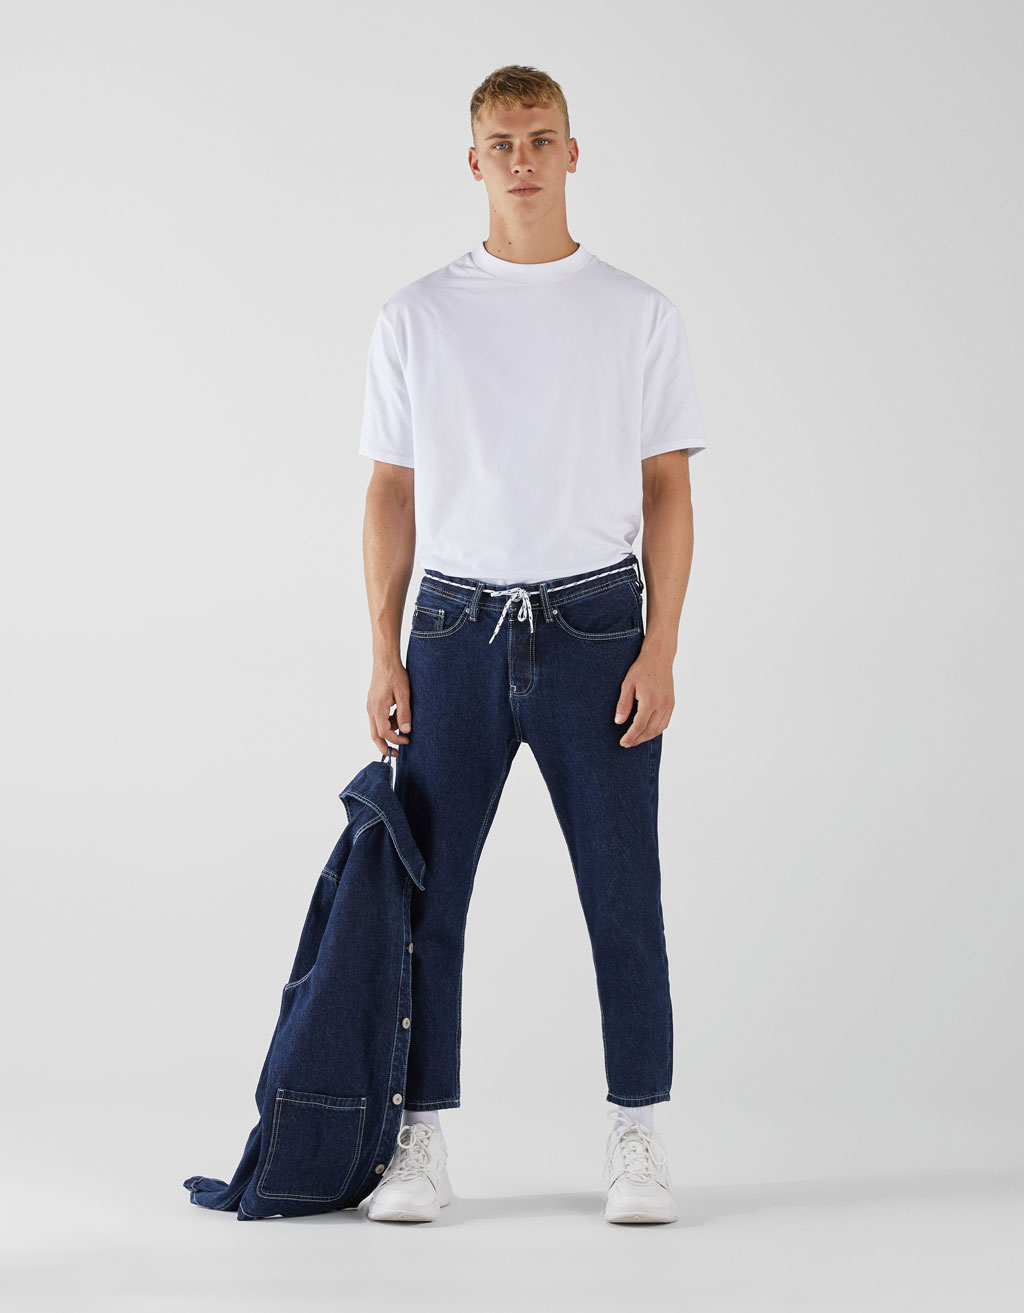 slim fit cropped jeans mens